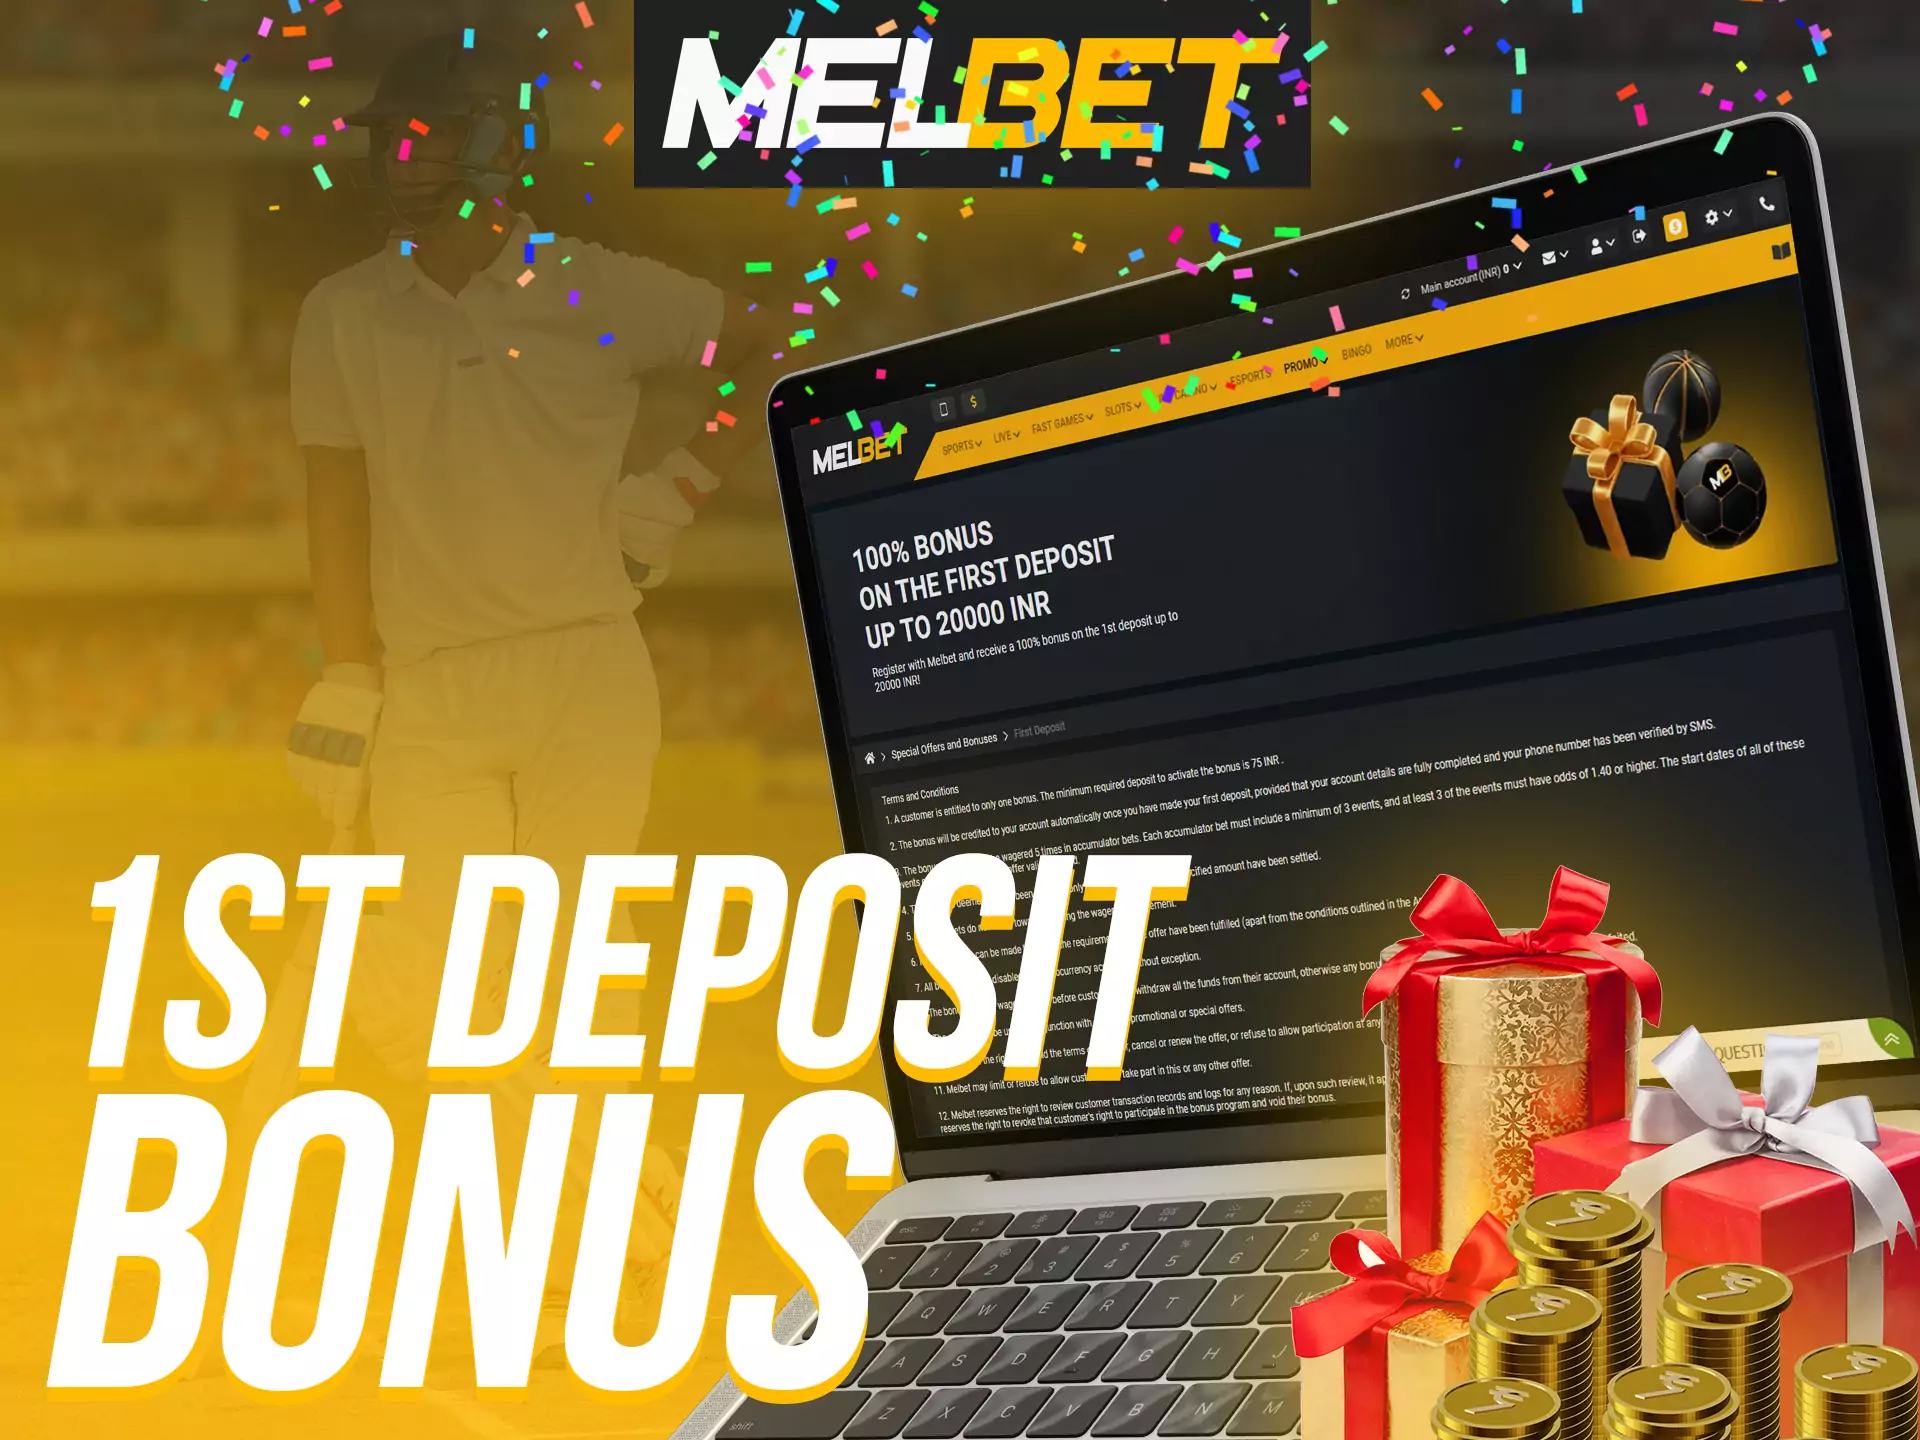 Melbet provides bonus after first client deposit.